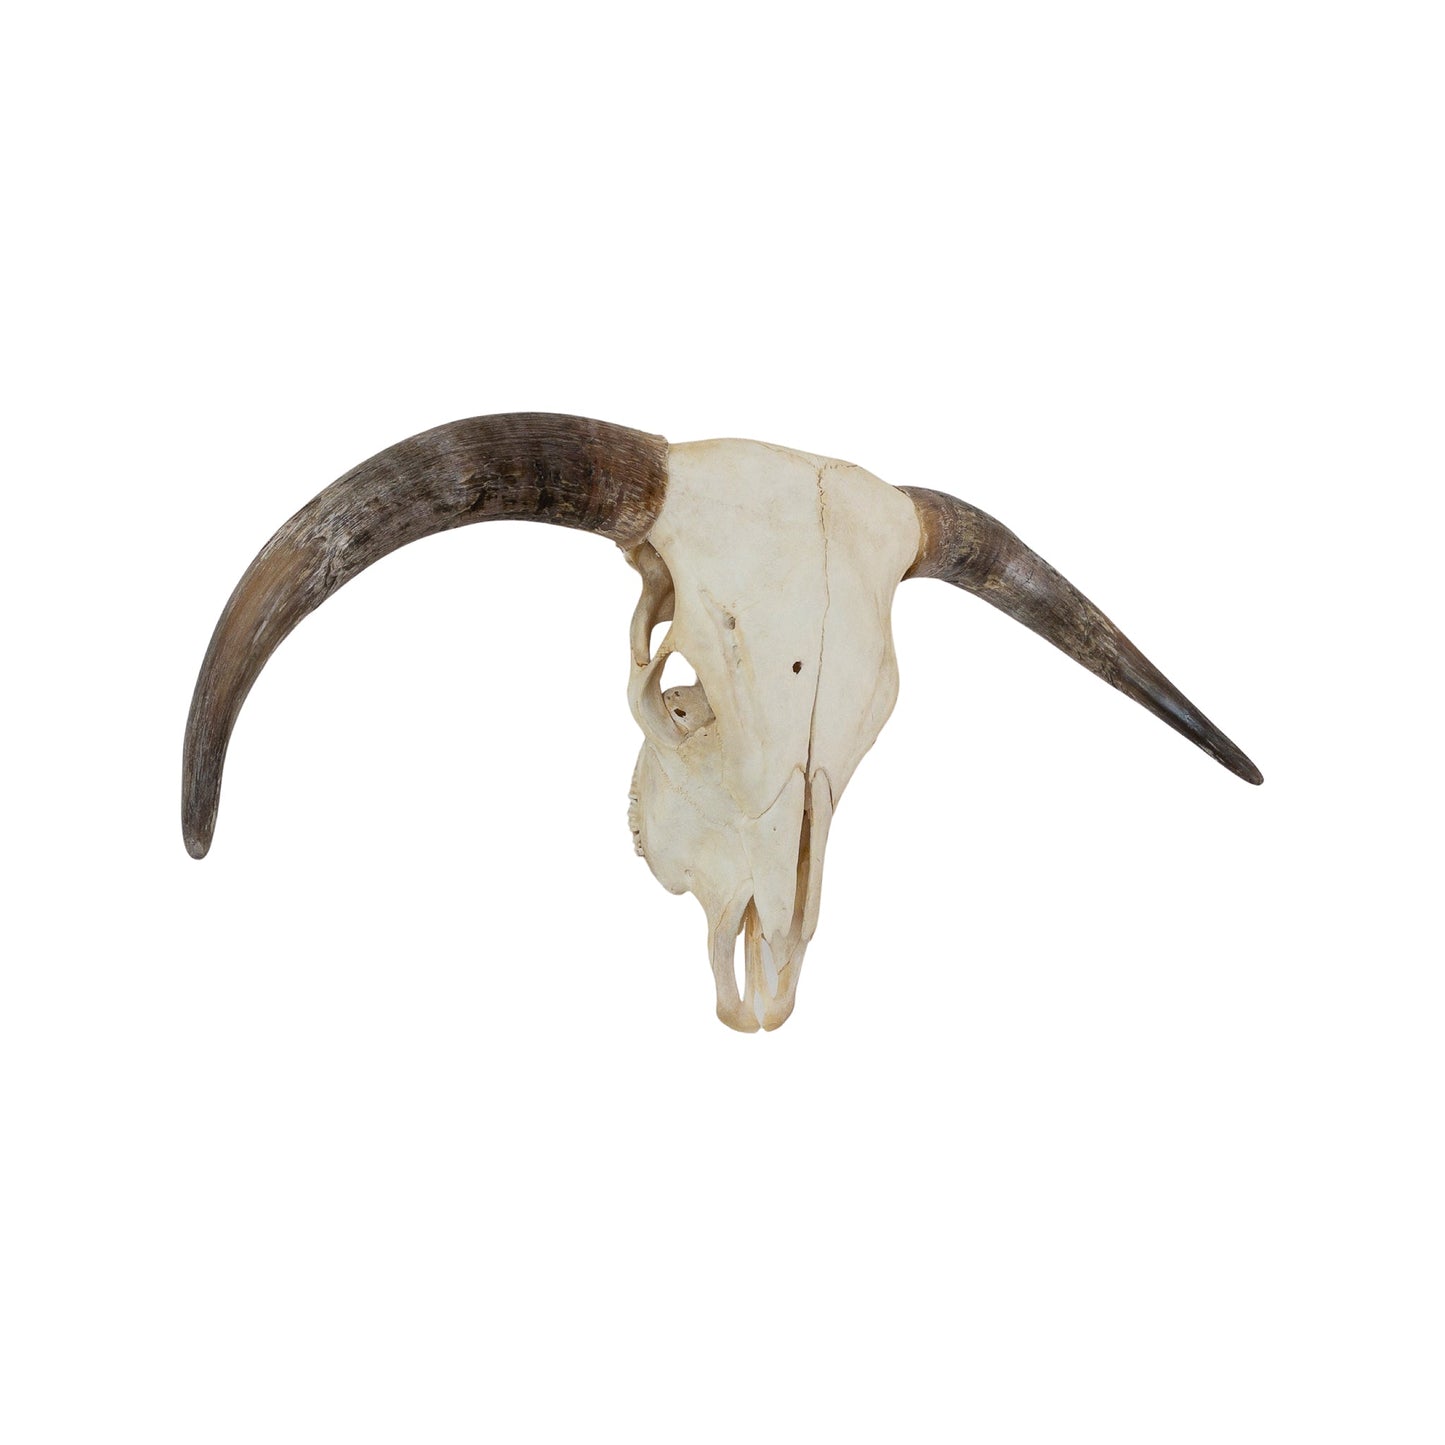 A Home Decor Taxidermy Skull Texas longhornof Grade Remarkable